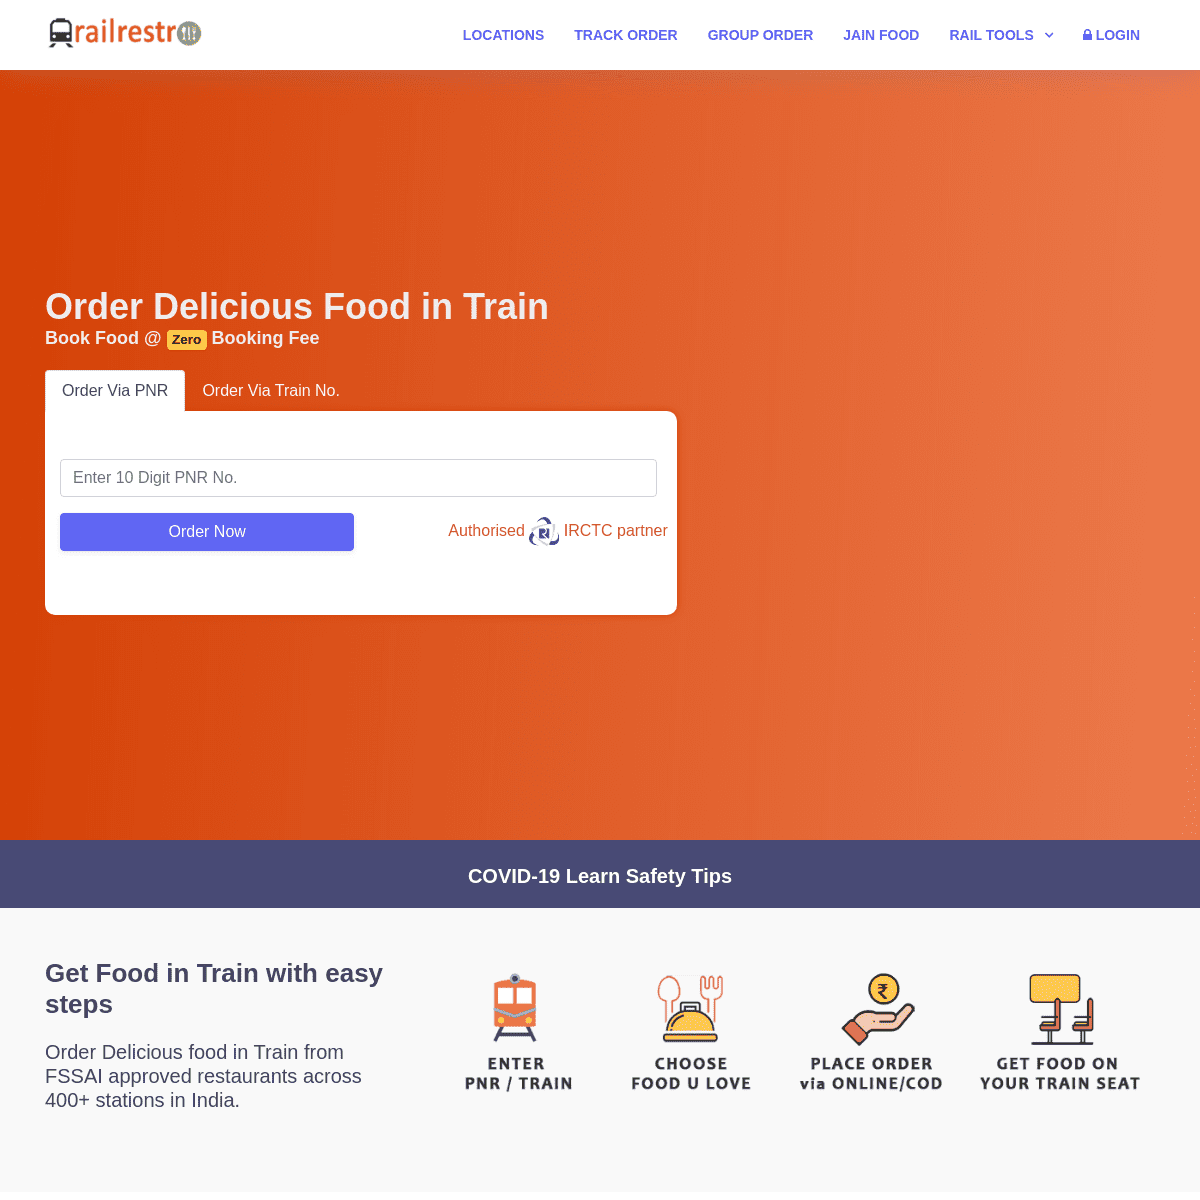 A complete backup of railrestro.com